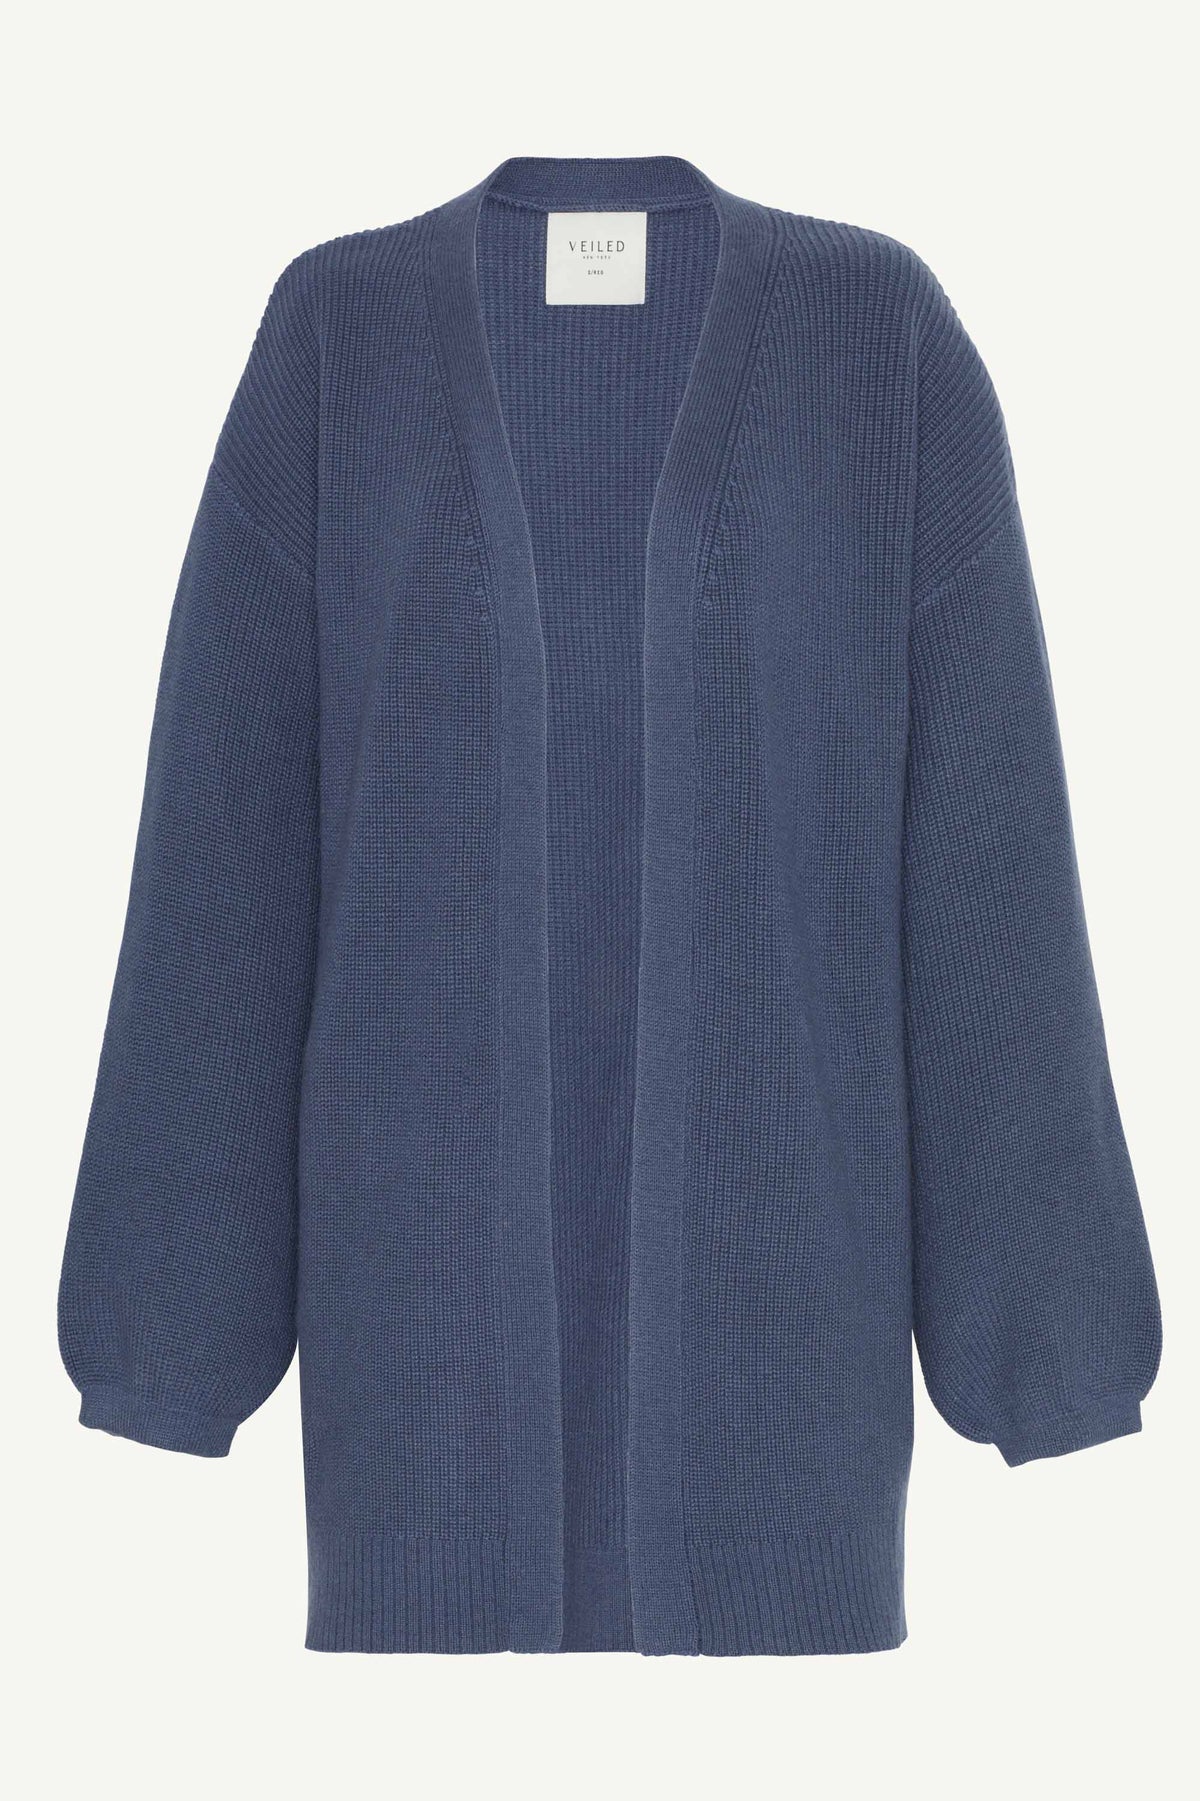 Merino Wool Balloon Sleeve Knit Cardigan - Denim Blue Clothing saigonodysseyhotel 